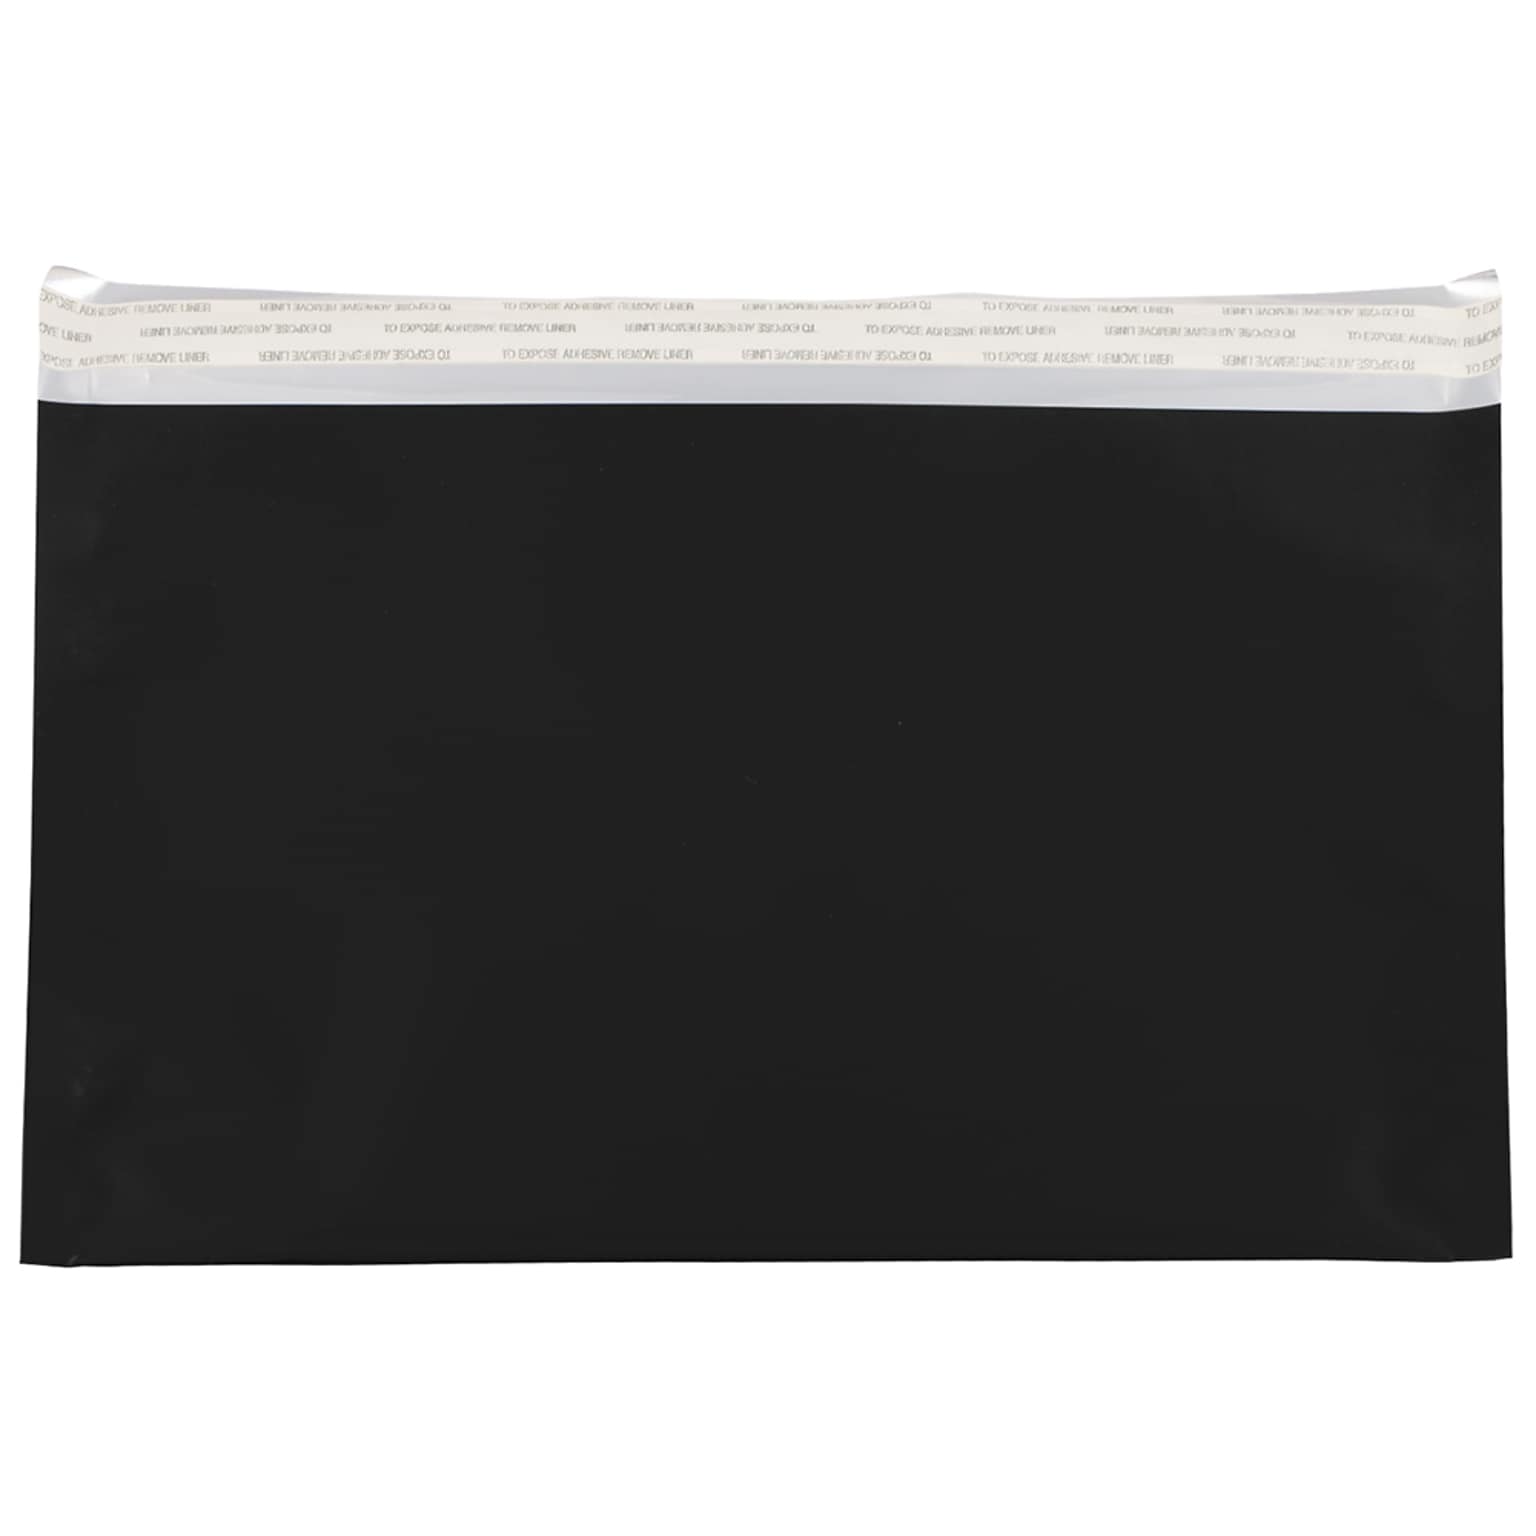 JAM Paper 6.125 x 9.5 Booklet Foil Envelopes with  Peel & Seal Closure, Black, 100/Pack (01323282B)